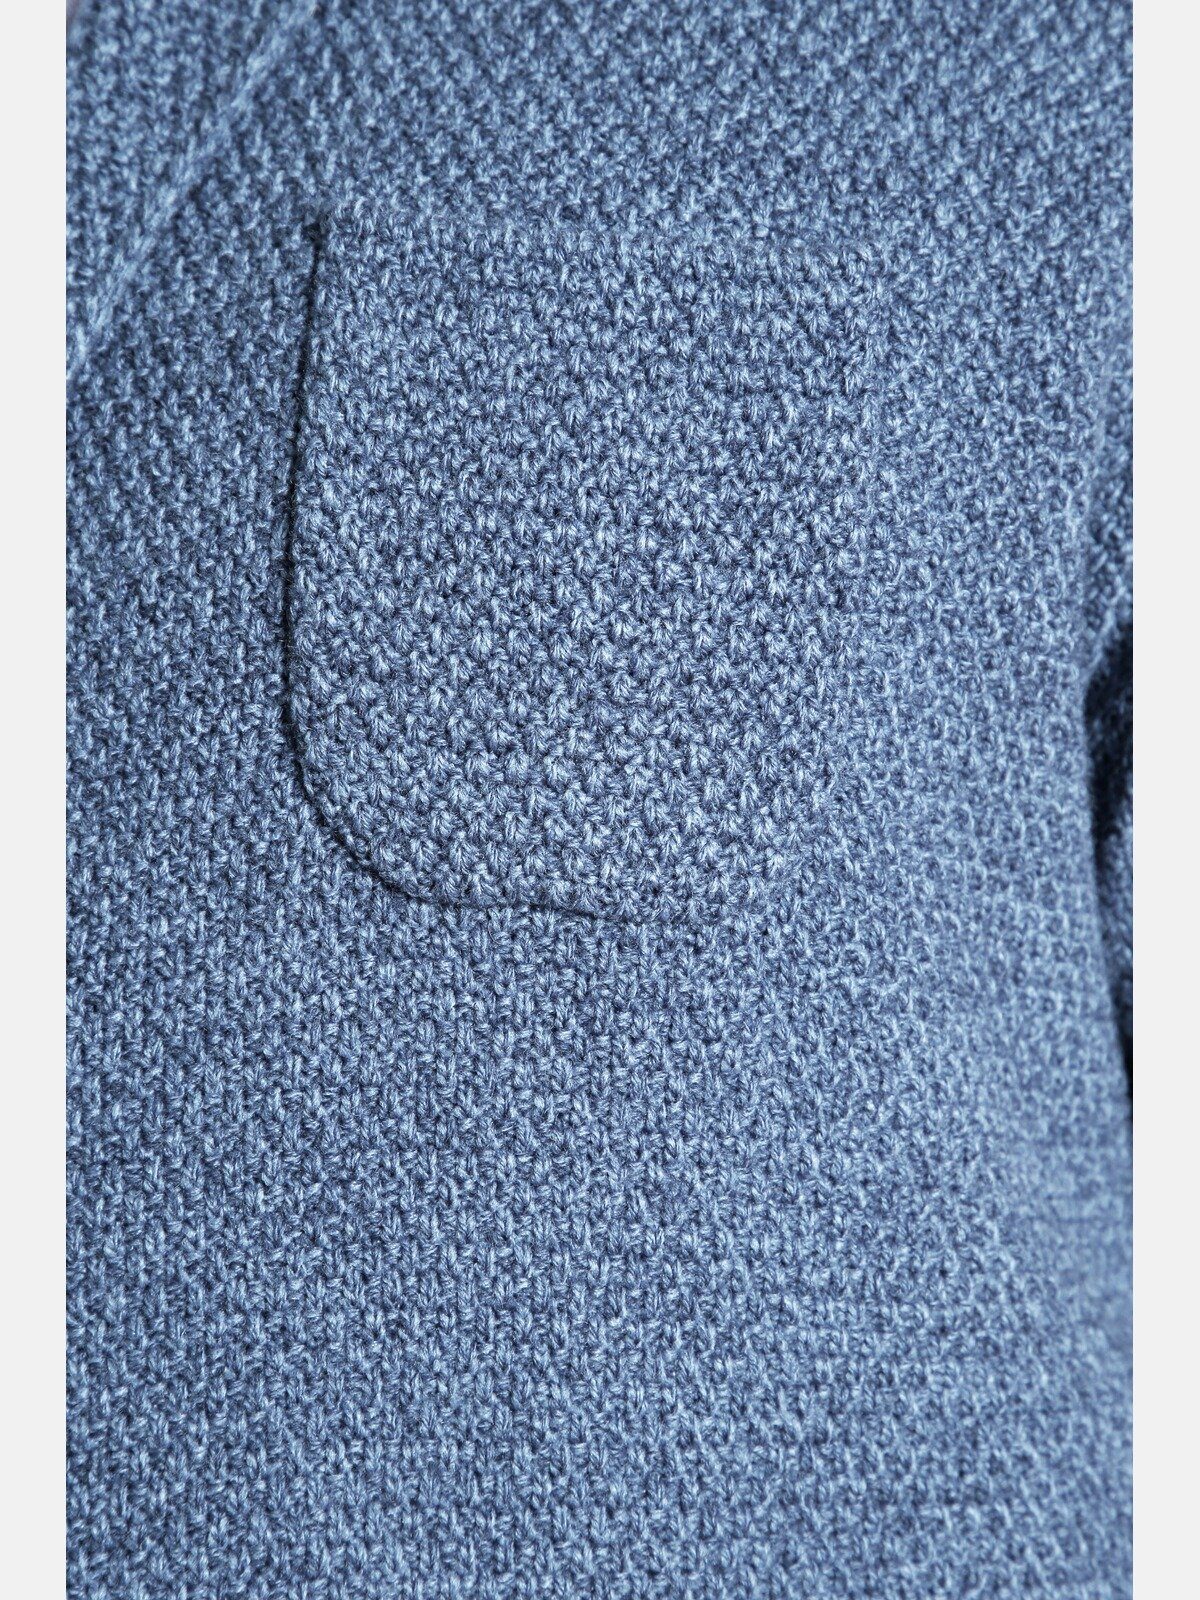 Charles Colby Cardigan EARL JAMES Wollgemisch hochwertigem blau aus